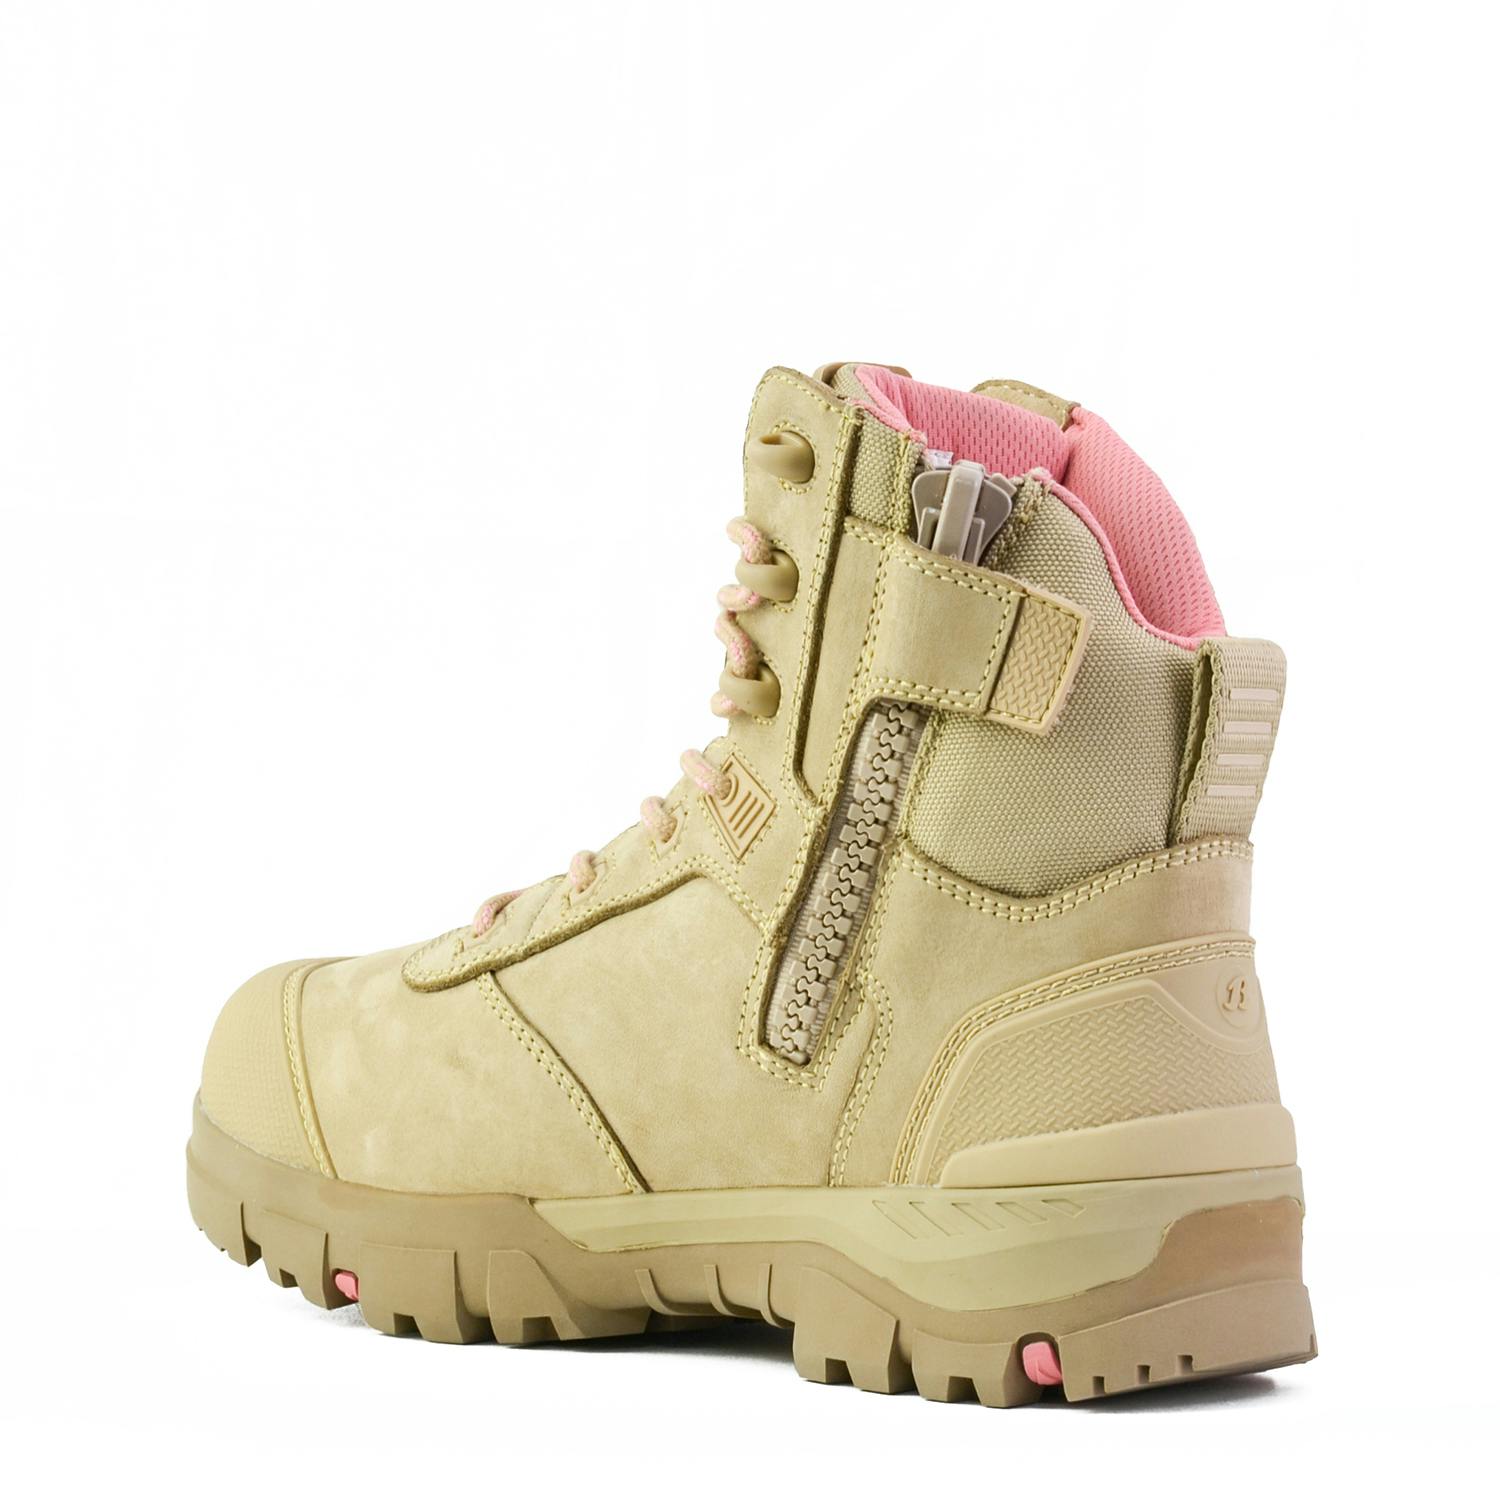 Bata Industrials Avenger - Ladies Zip Sided Safety Boot Sand_3